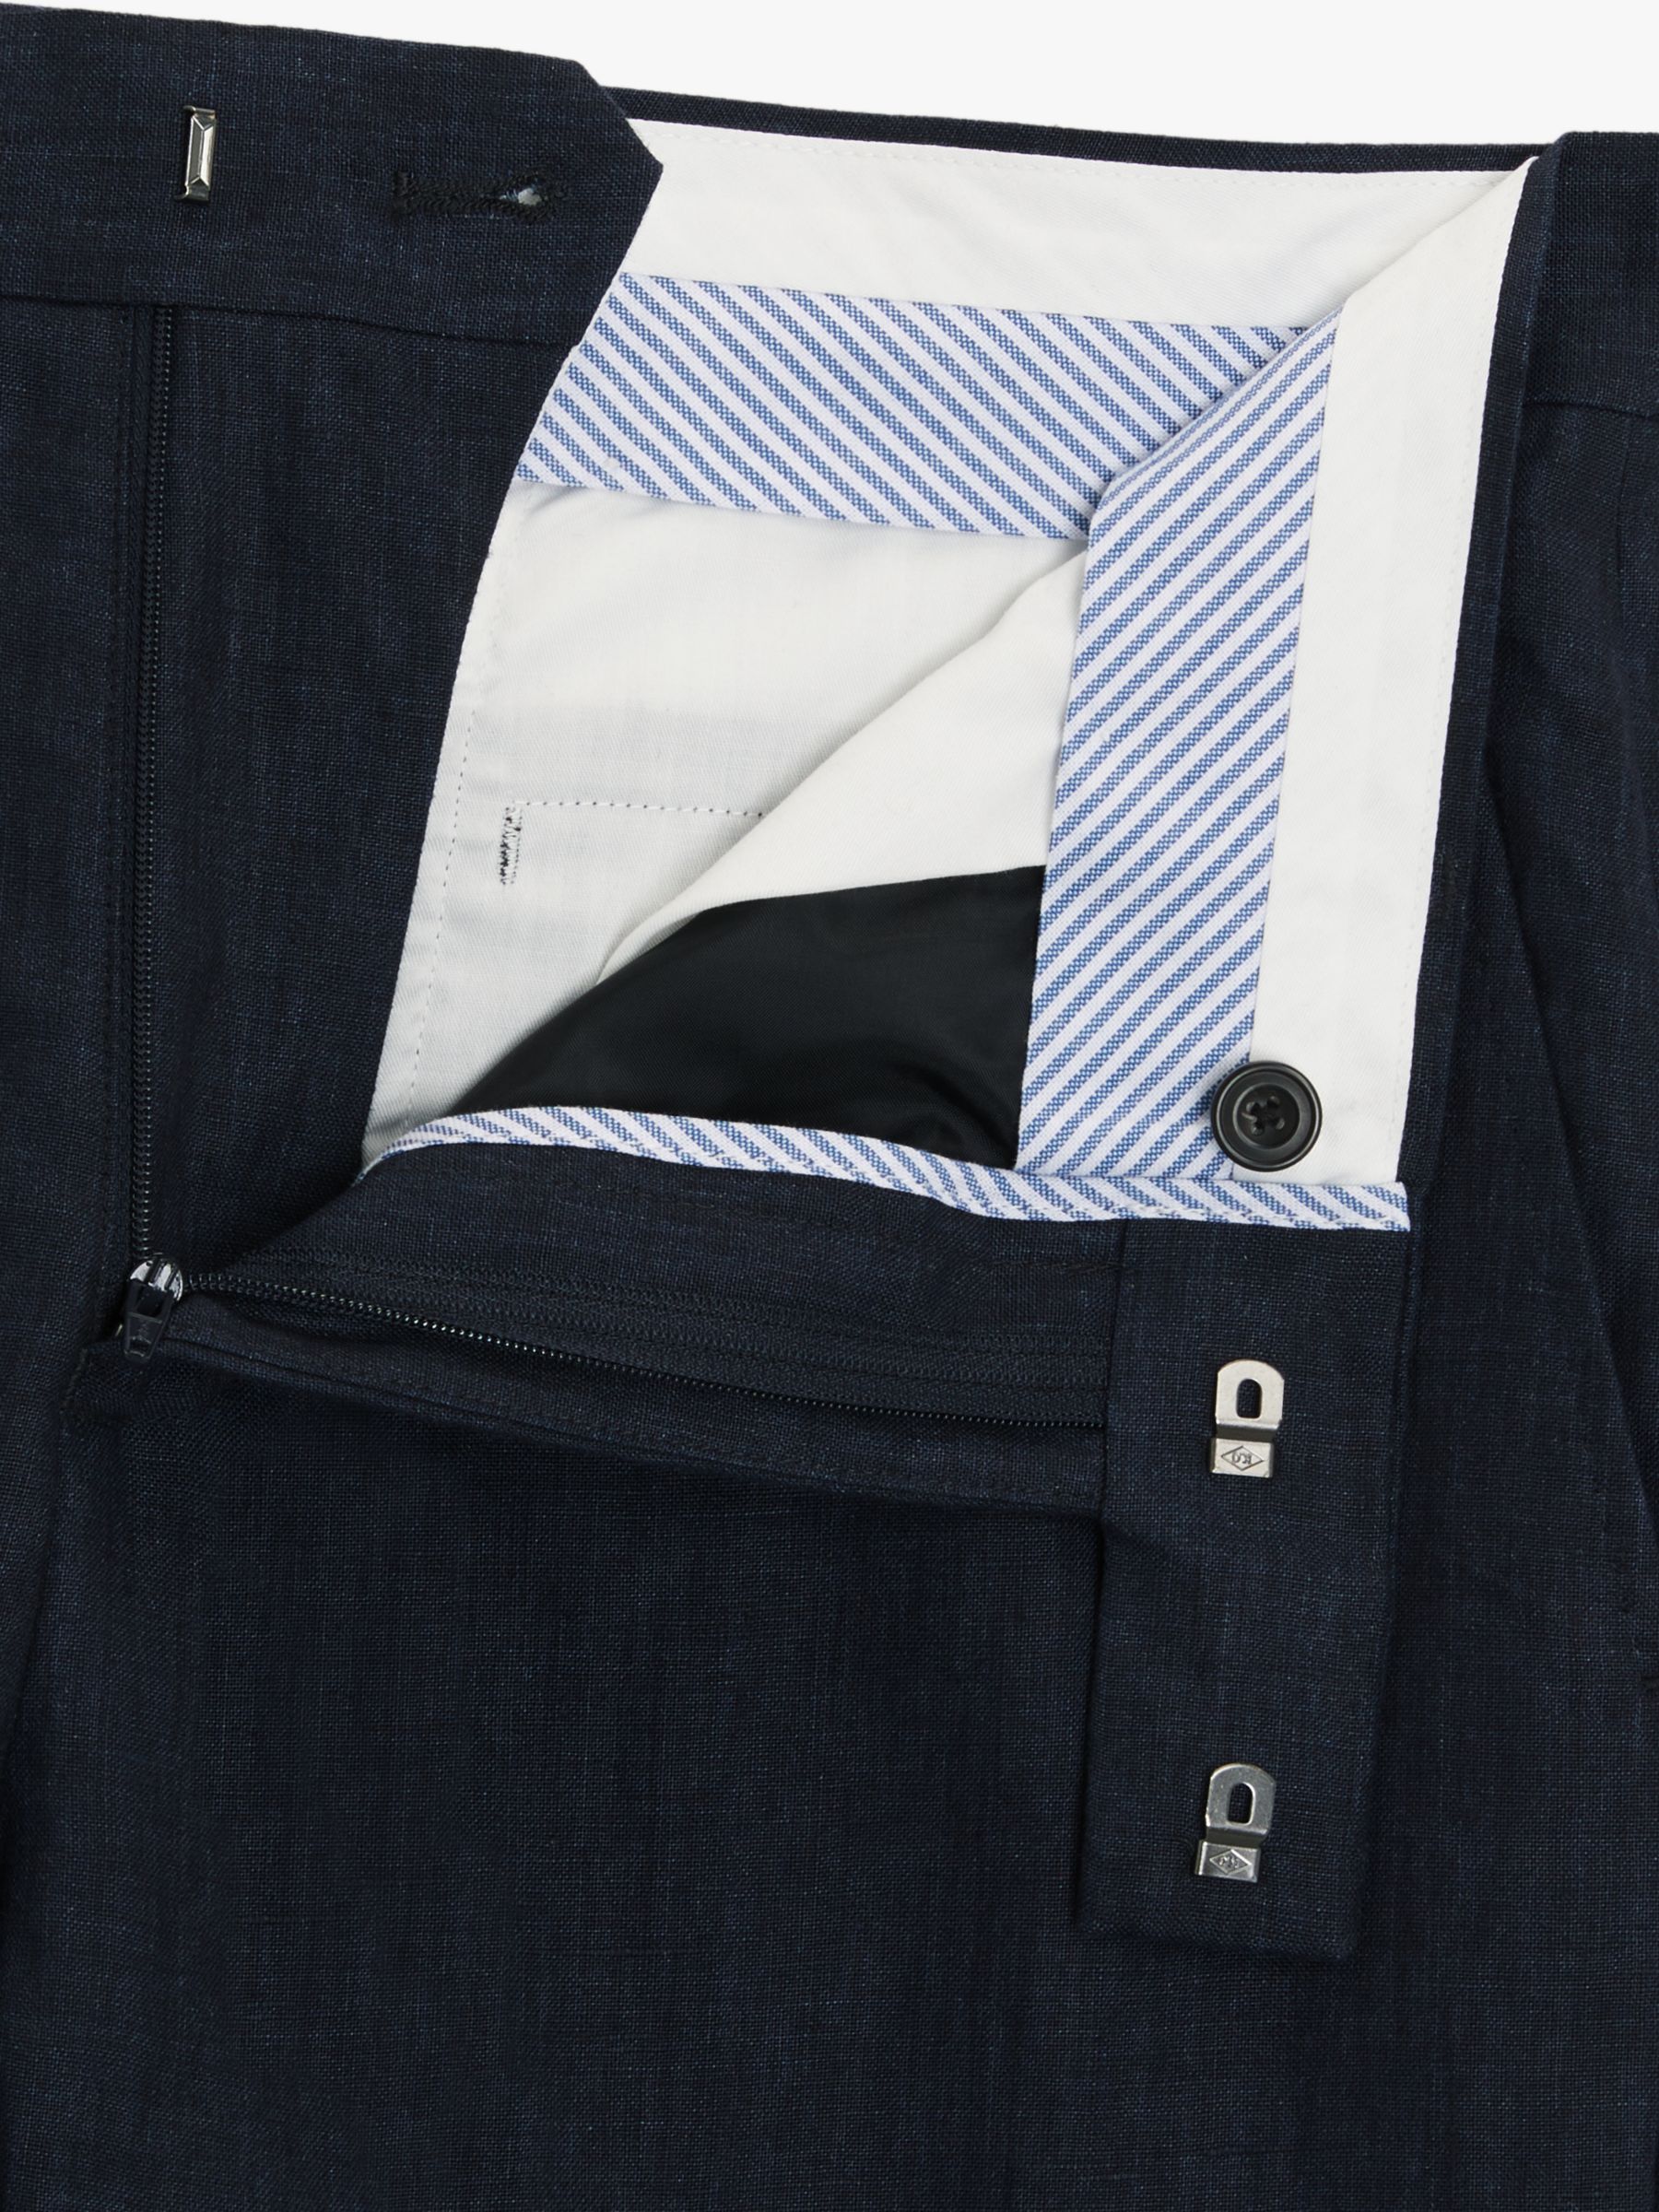 John Lewis Linen Regular Fit Suit Trousers, Navy at John Lewis & Partners